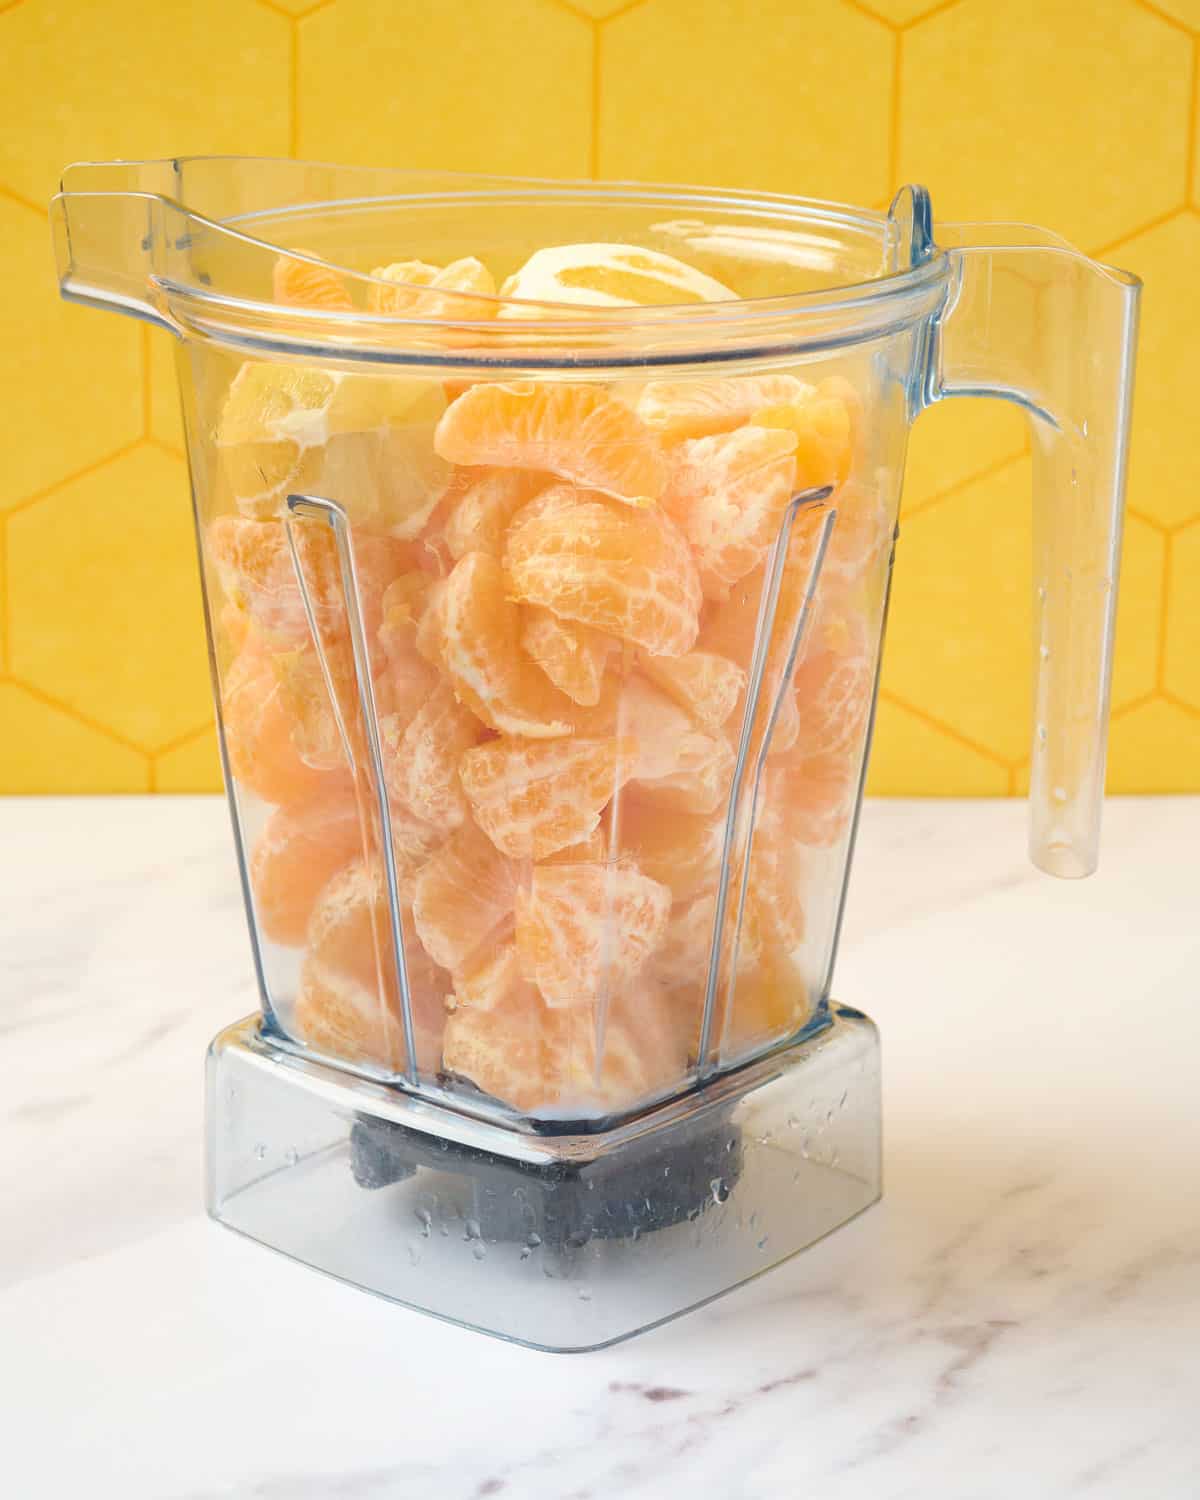 Peeled mandarins and lemons in a blender prepared to make mandarin juice.